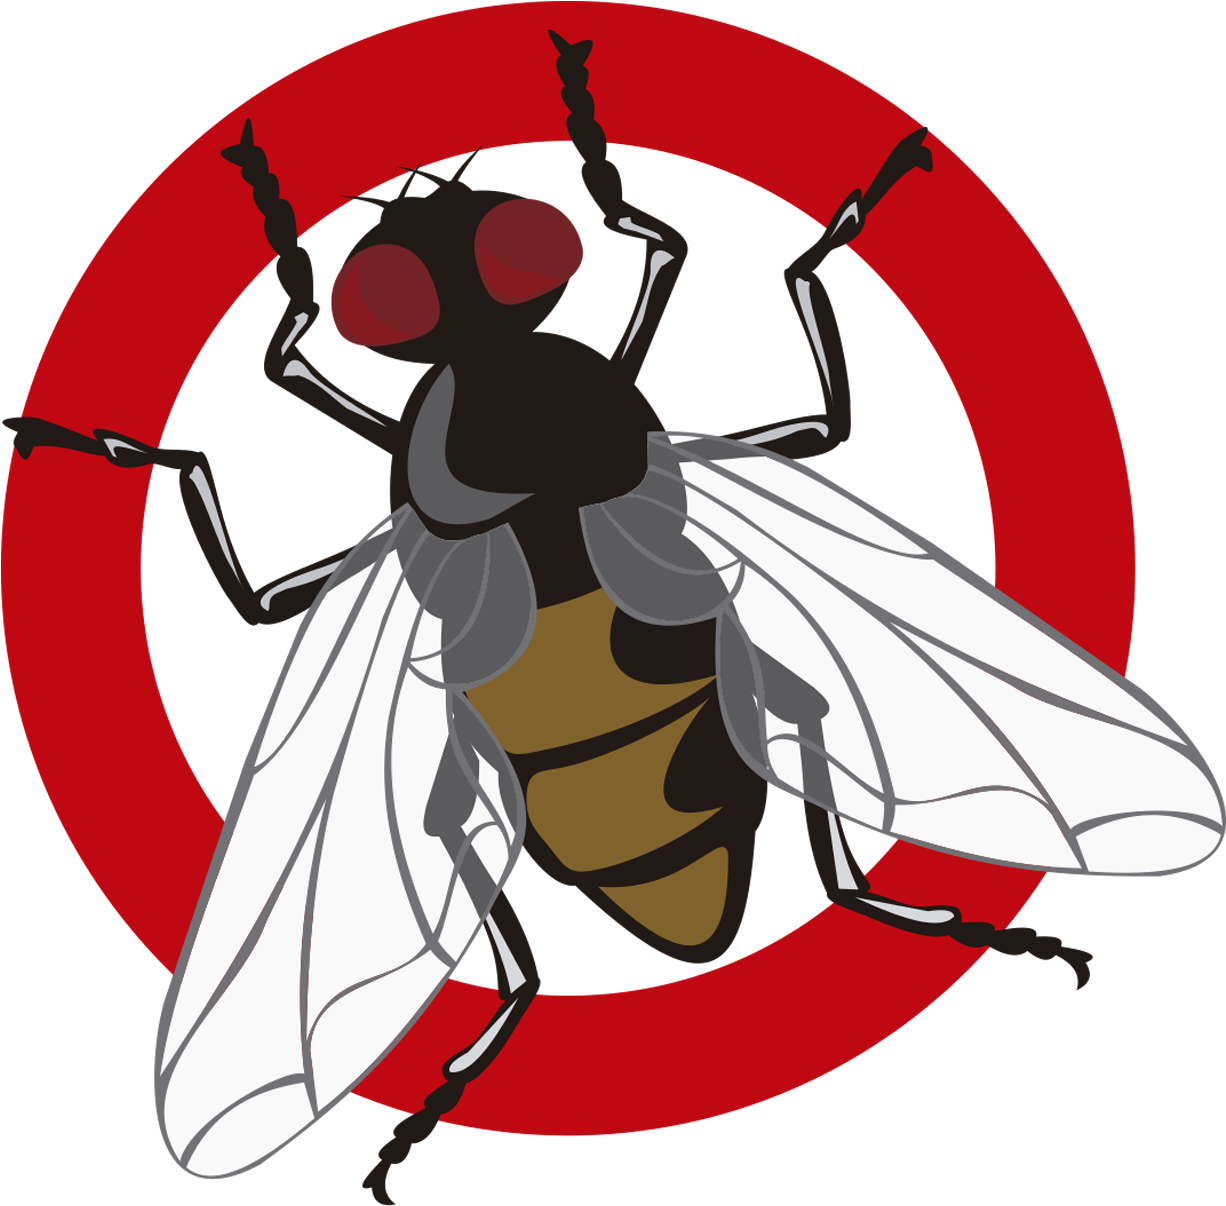 Flies - Gumu Ultrasonic Pest Control Repeller - Electronic (1383x1383)